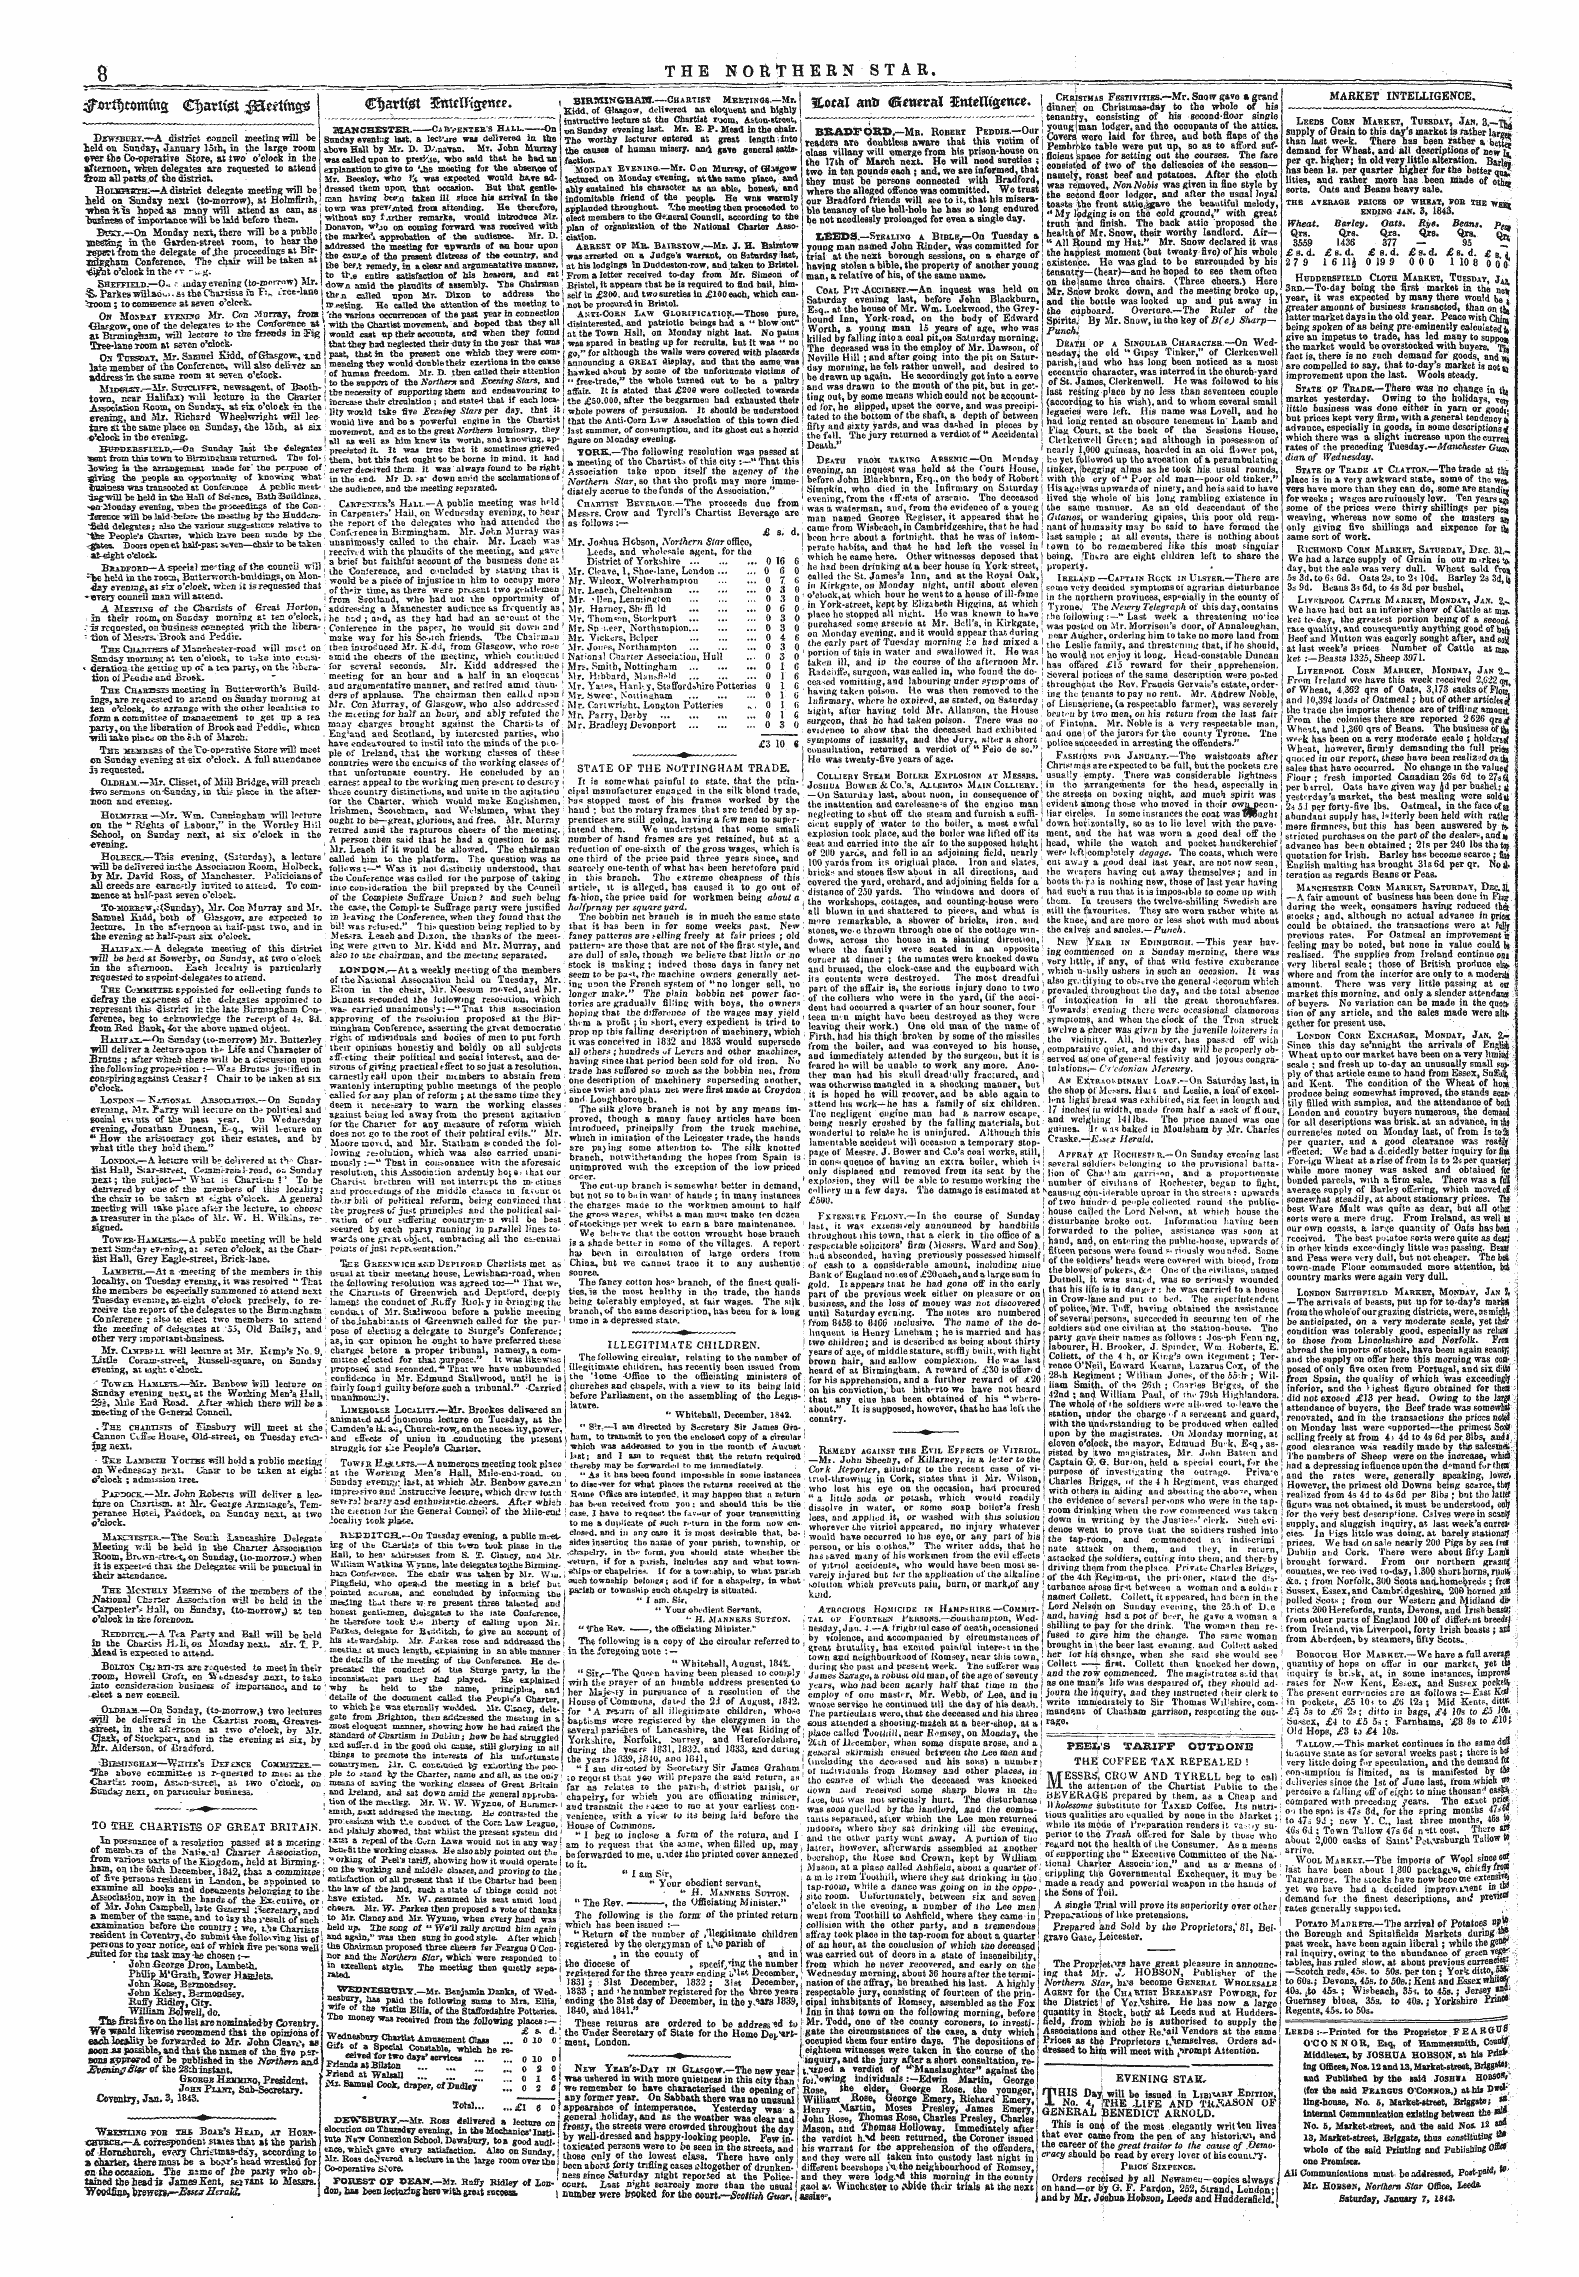 Northern Star (1837-1852): jS F Y, 4th edition - Futal Anli &Lt;&Entt&L Ententseutt